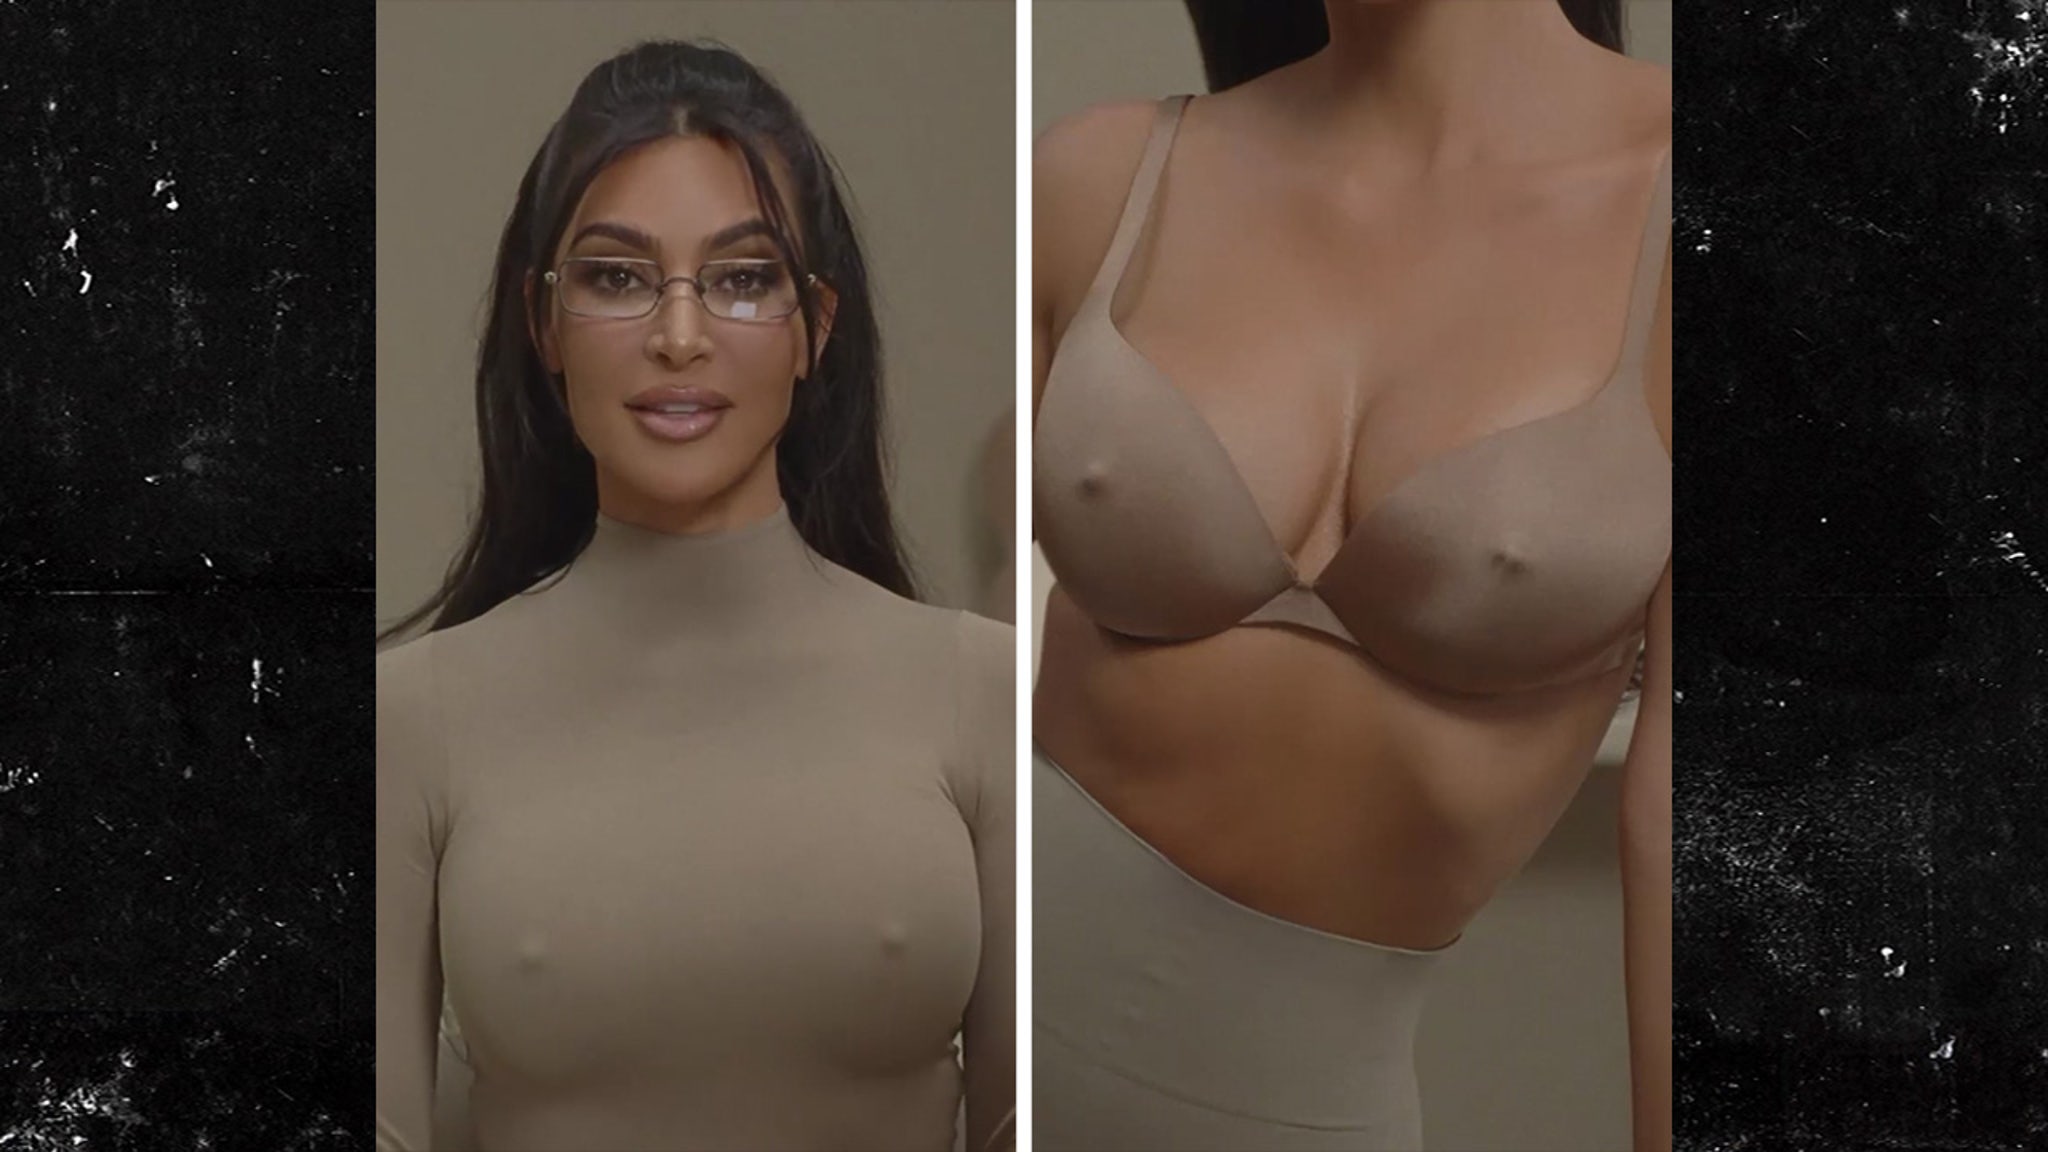 I'm obsessed with Kim Kardashian's nipple bra - I wish my boobs